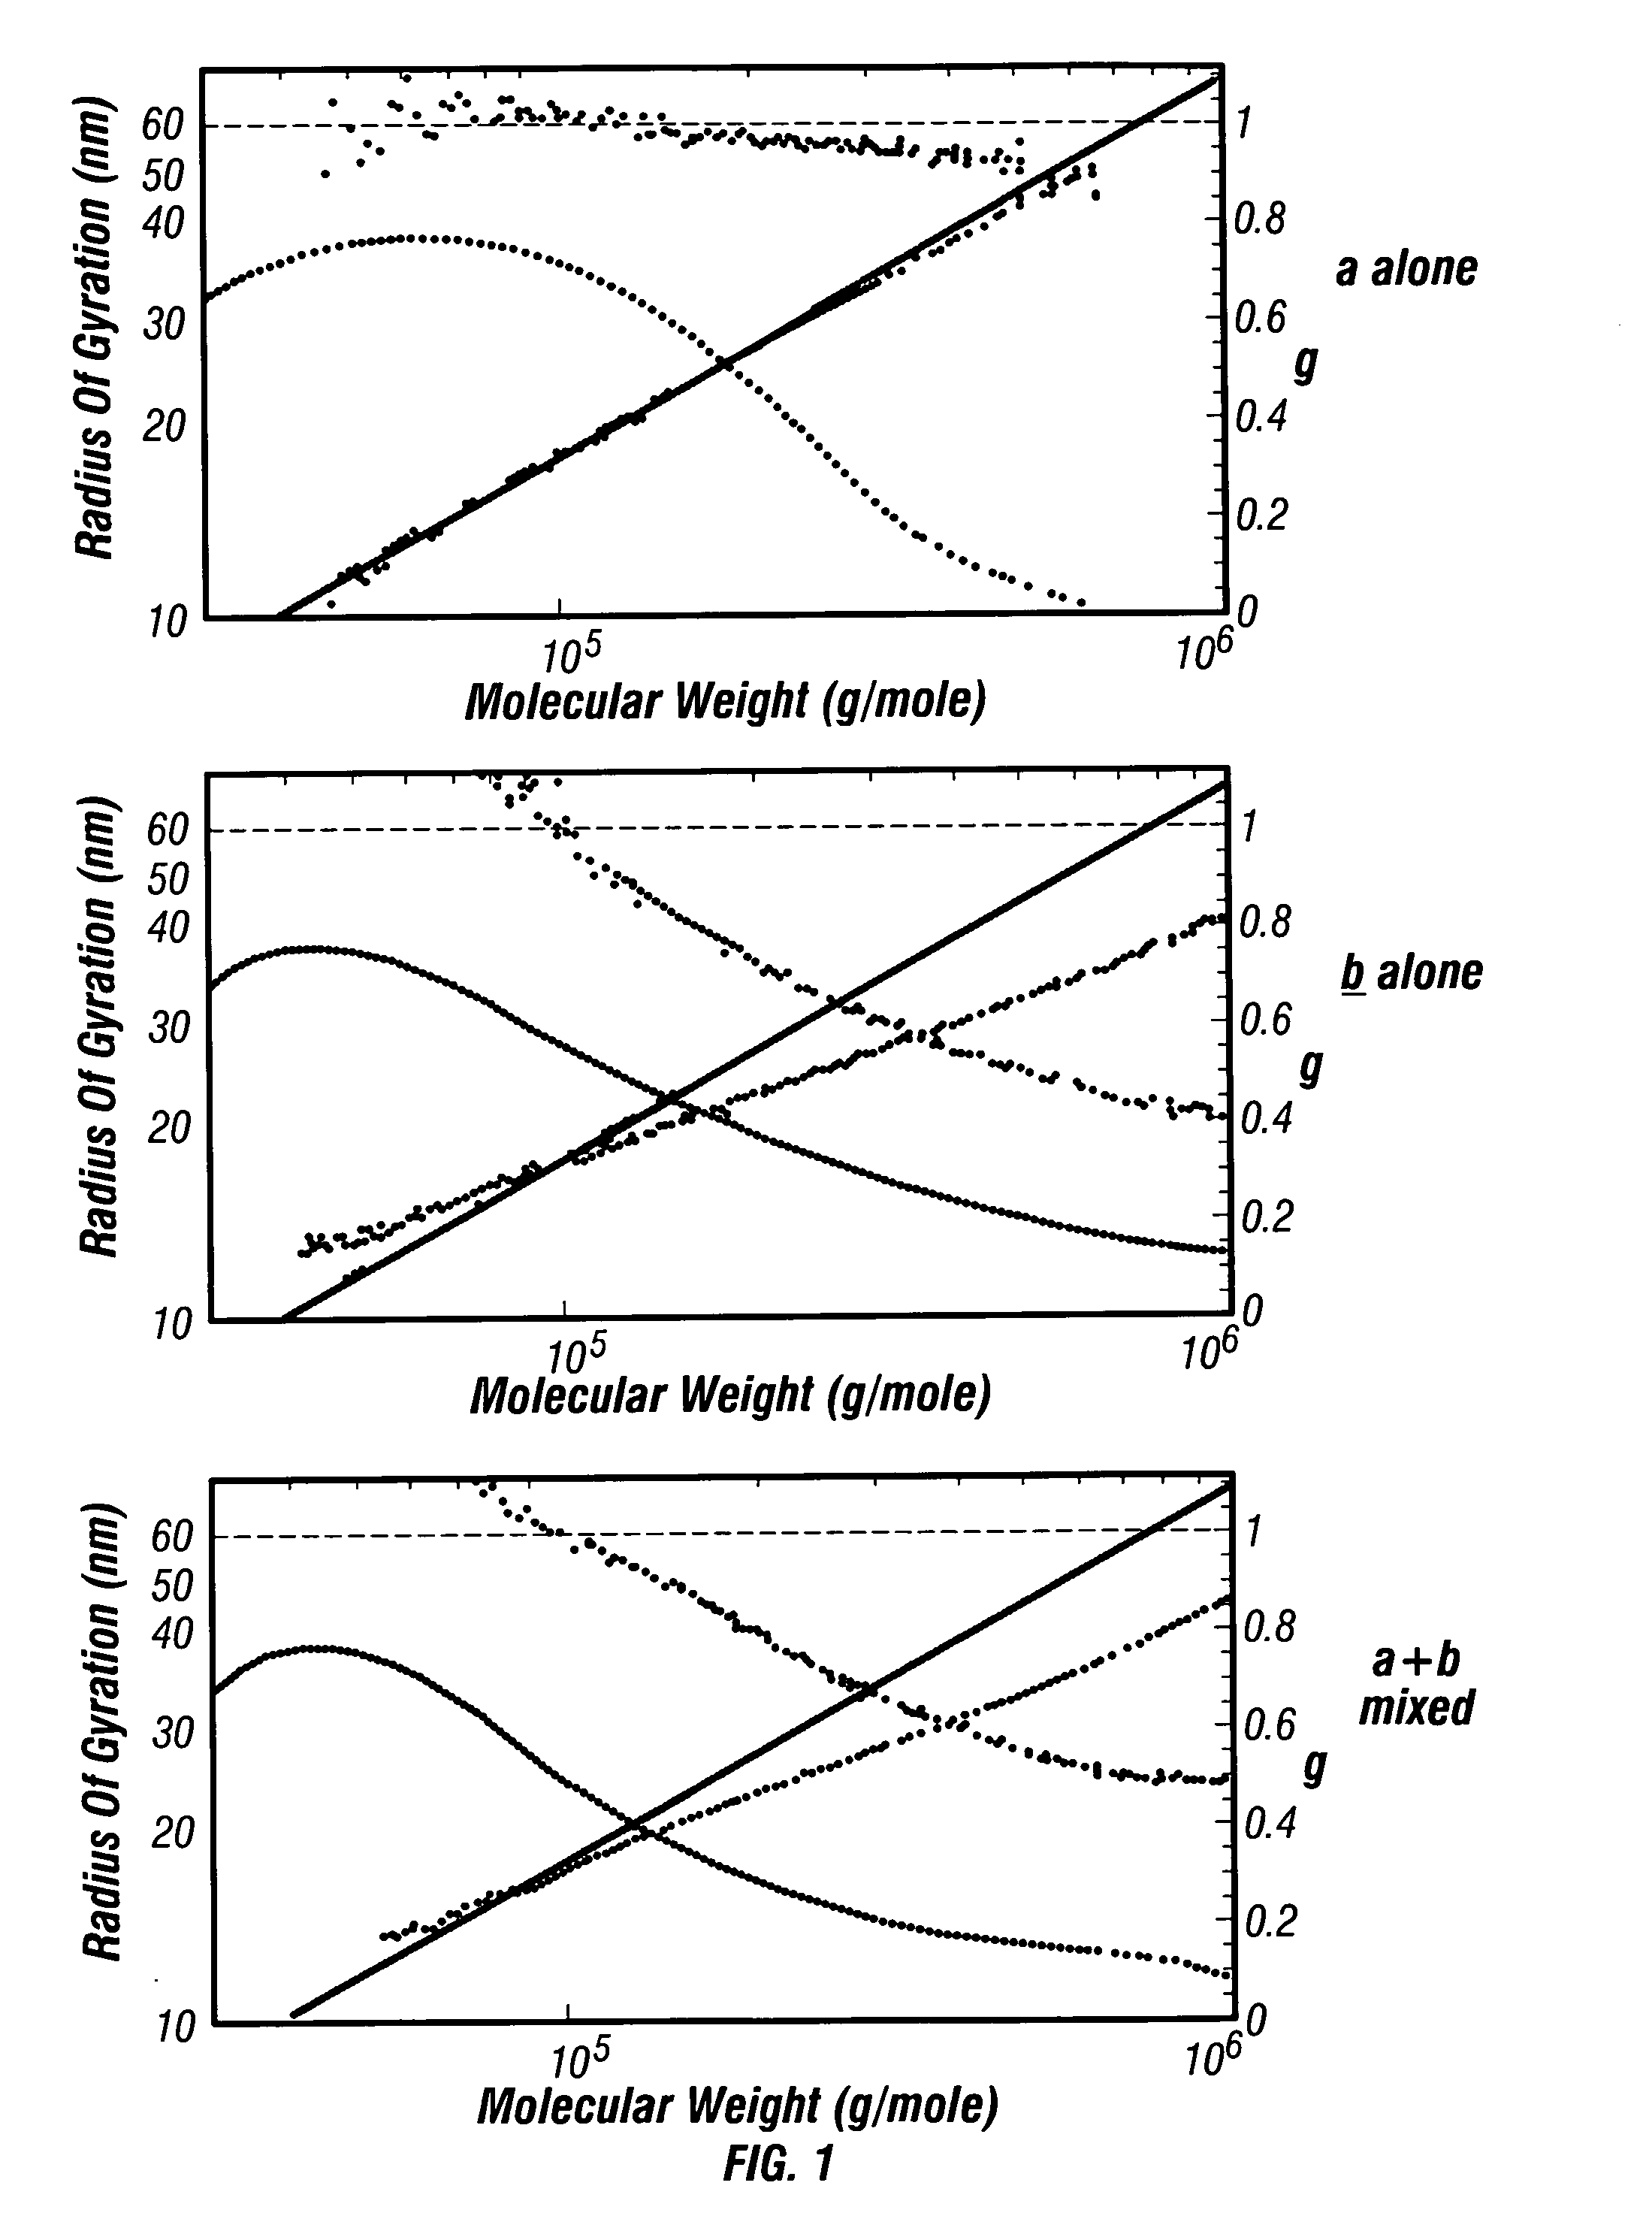 Linear low density polyethylenes with high melt strength and high melt index ratio